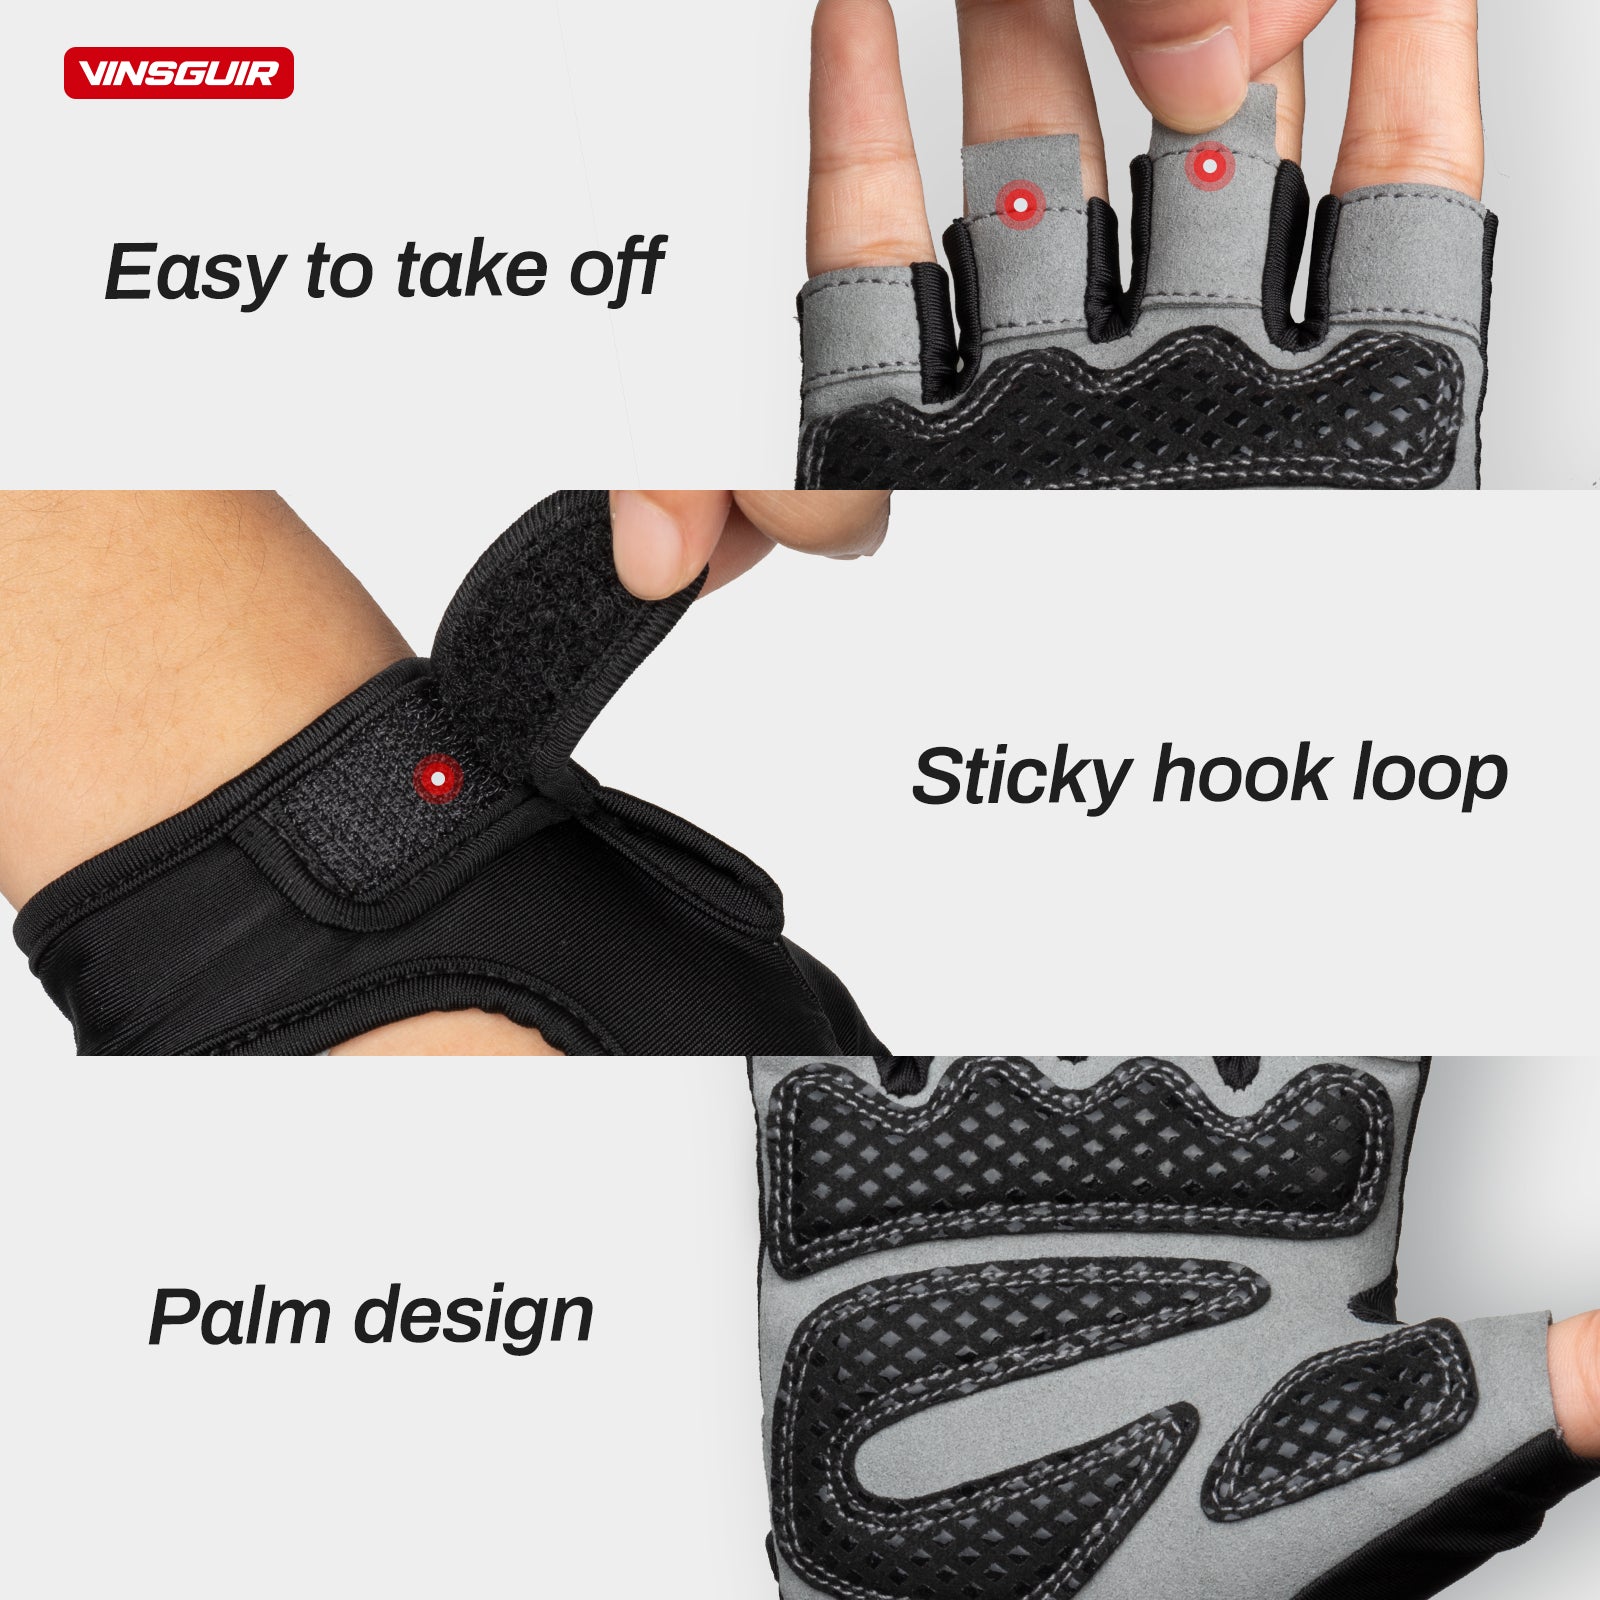 Vinsguir Workout Gloves